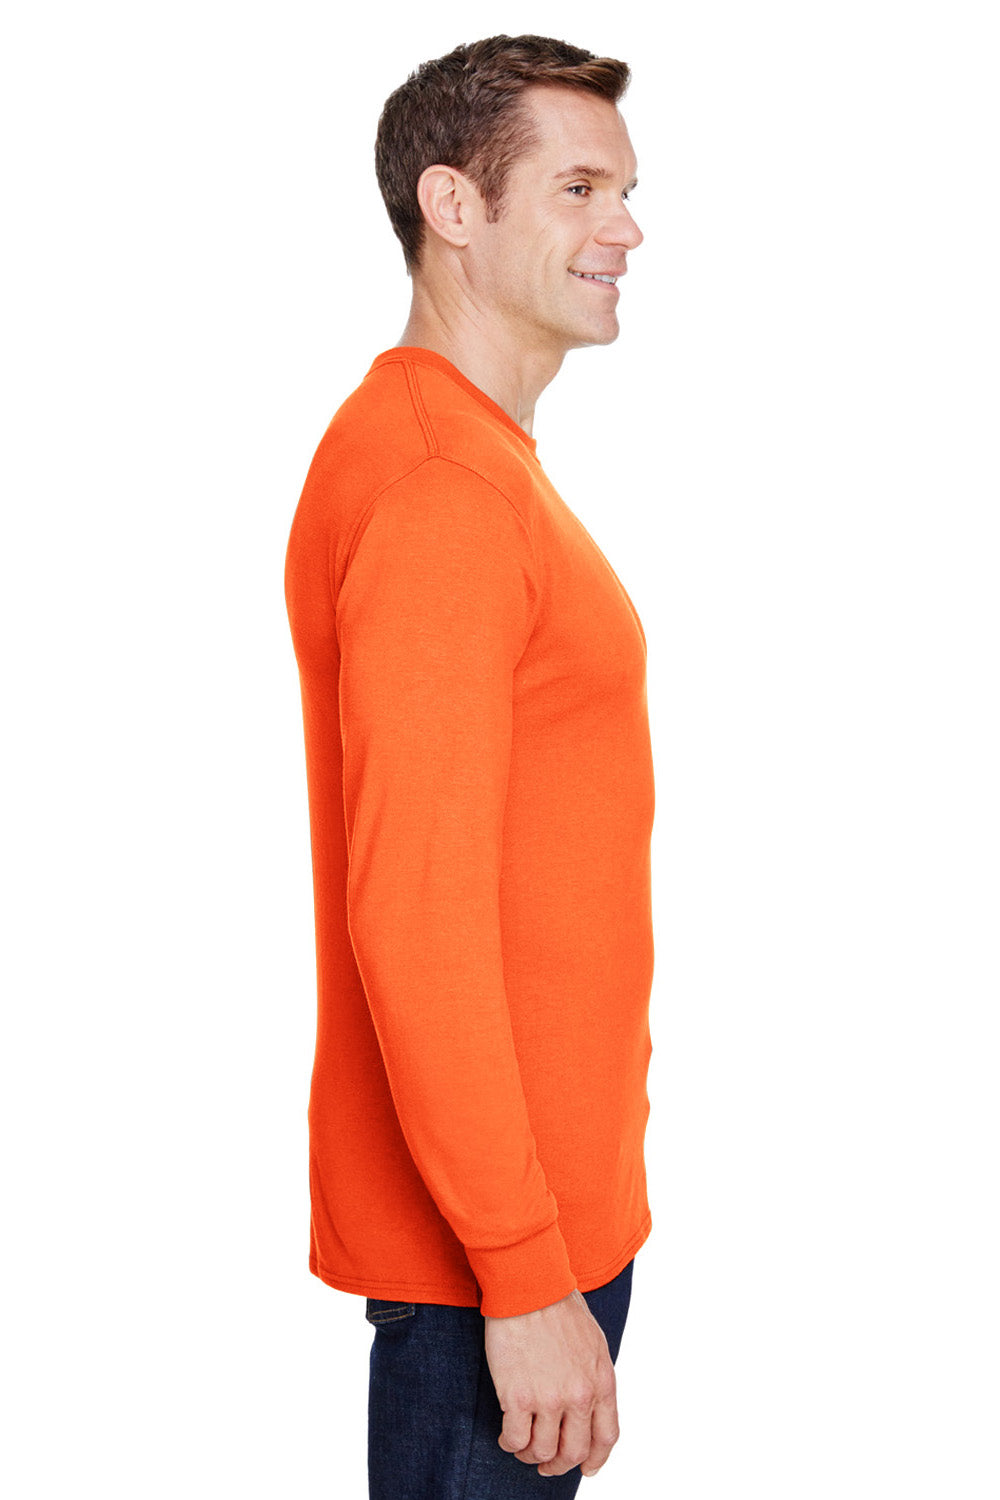 Hanes W120 Mens Workwear Long Sleeve Crewneck T-Shirt w/ Pocket Safety Orange Side